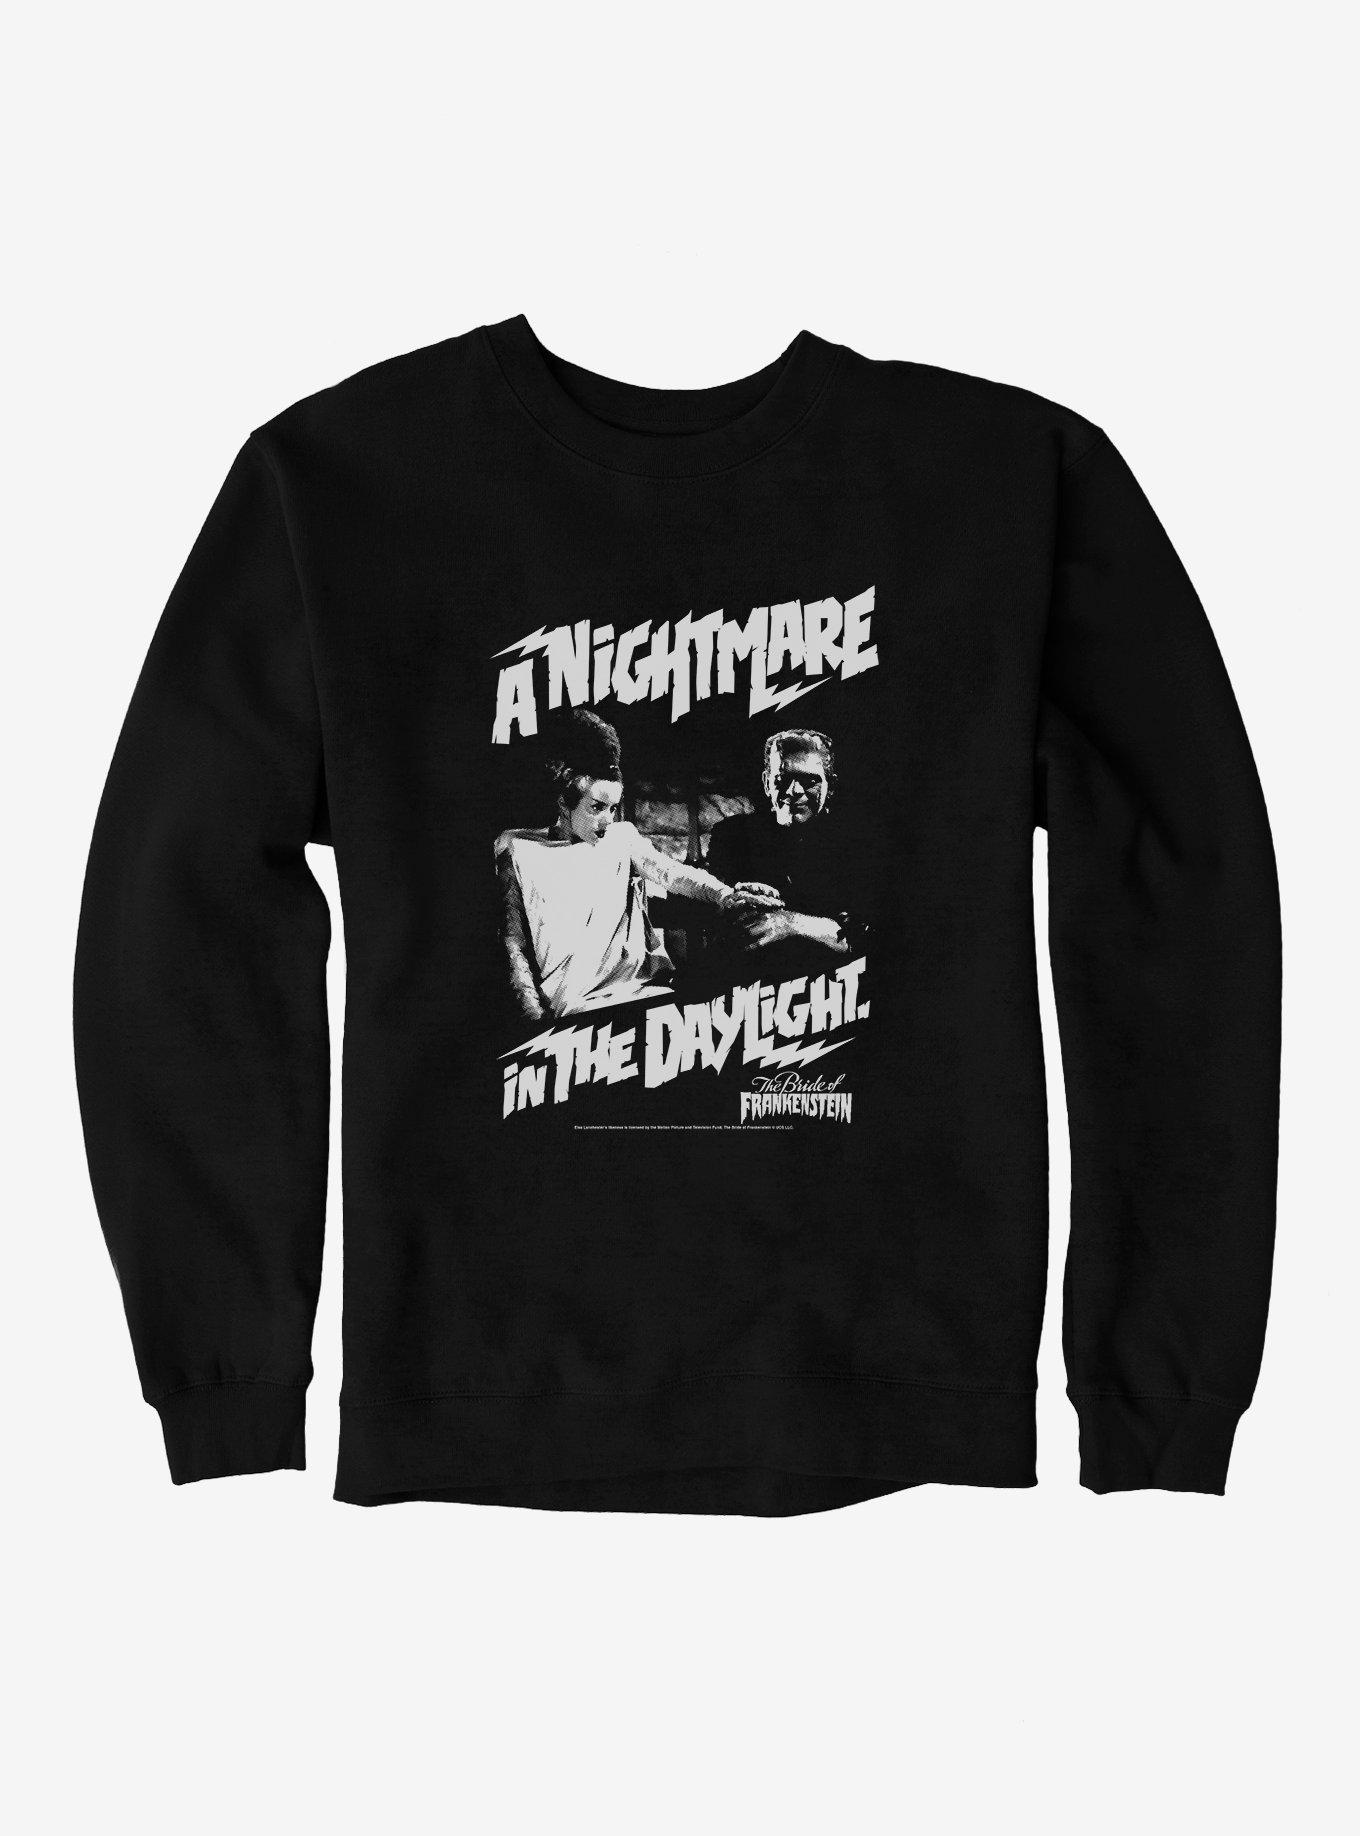 The Bride Of Frankenstein A Nightmare In The Daylight Sweatshirt, BLACK, hi-res